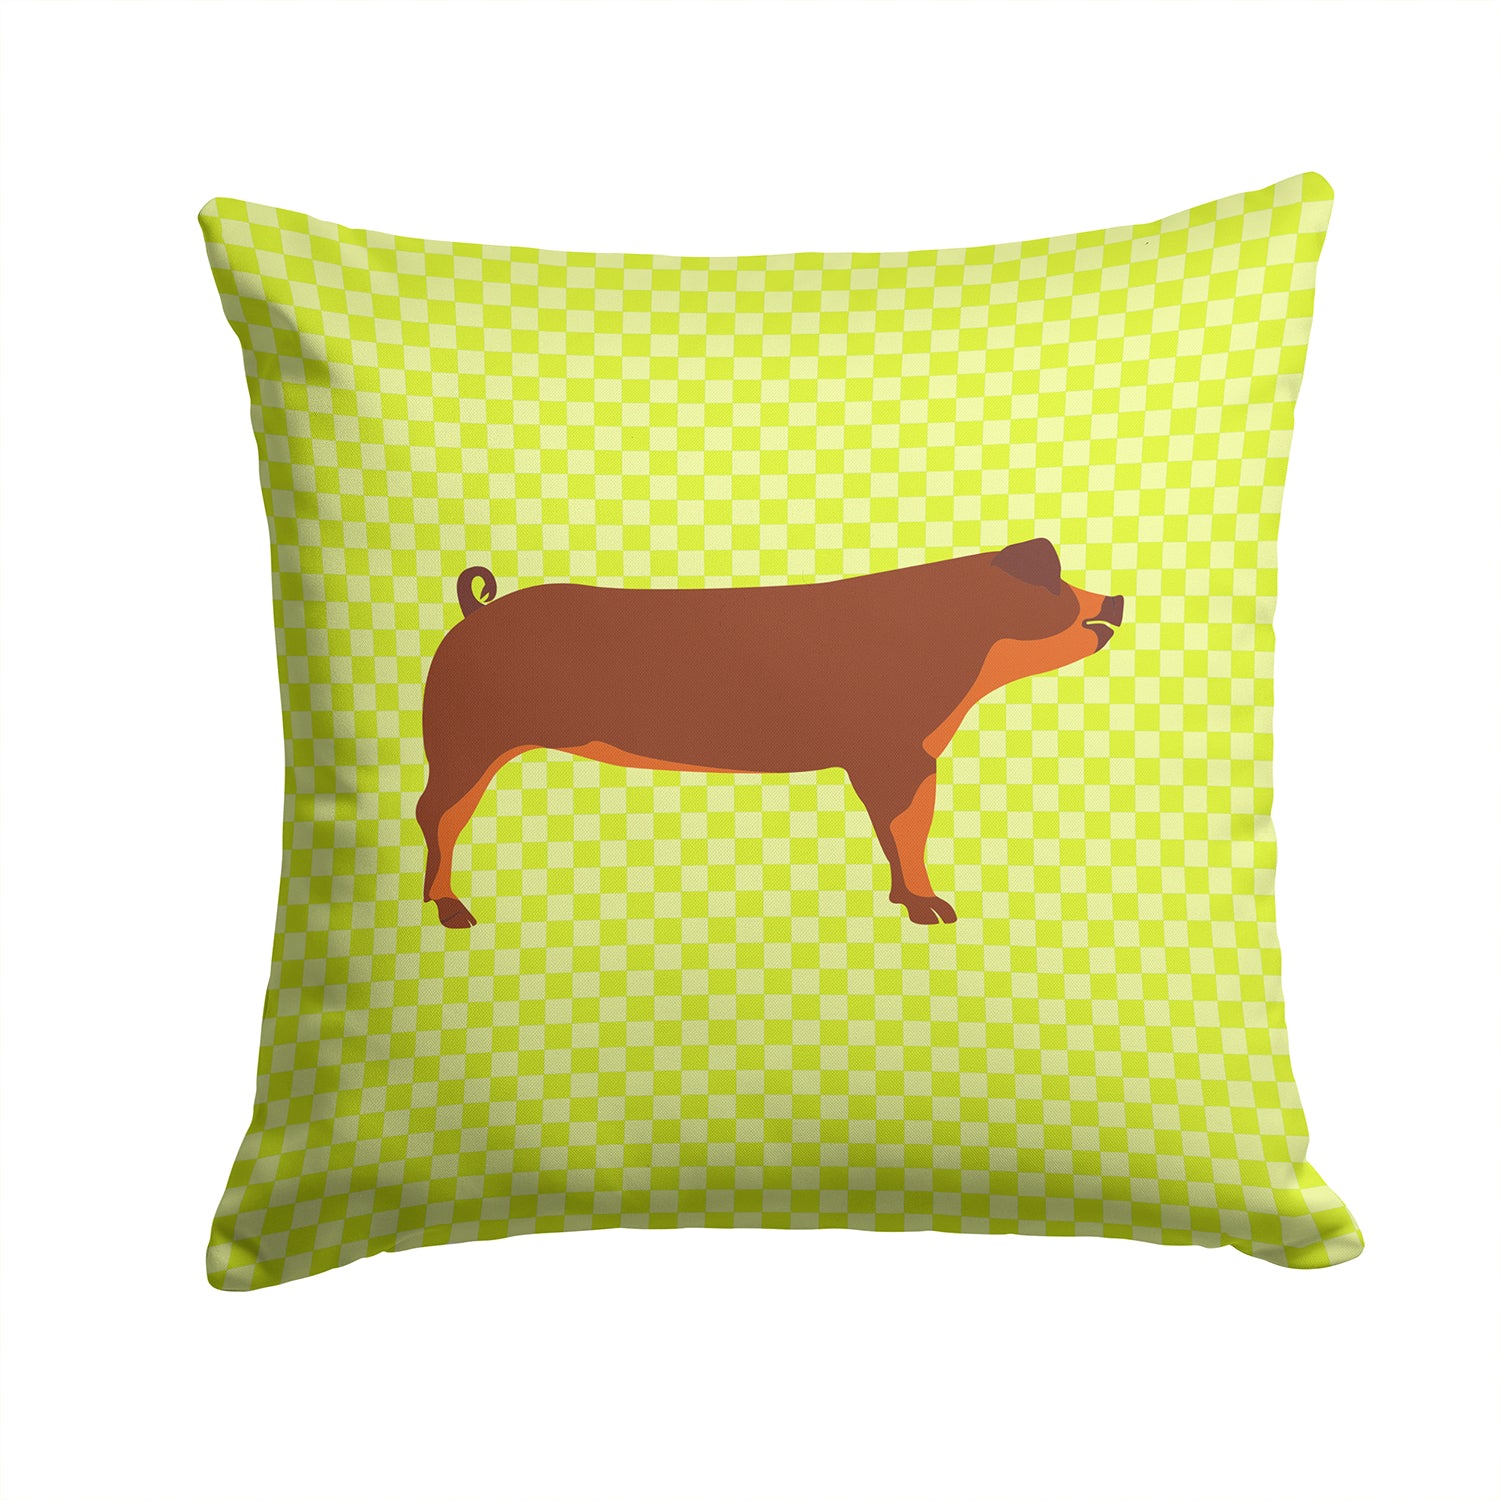 Duroc Pig Green Fabric Decorative Pillow BB7768PW1414 - the-store.com